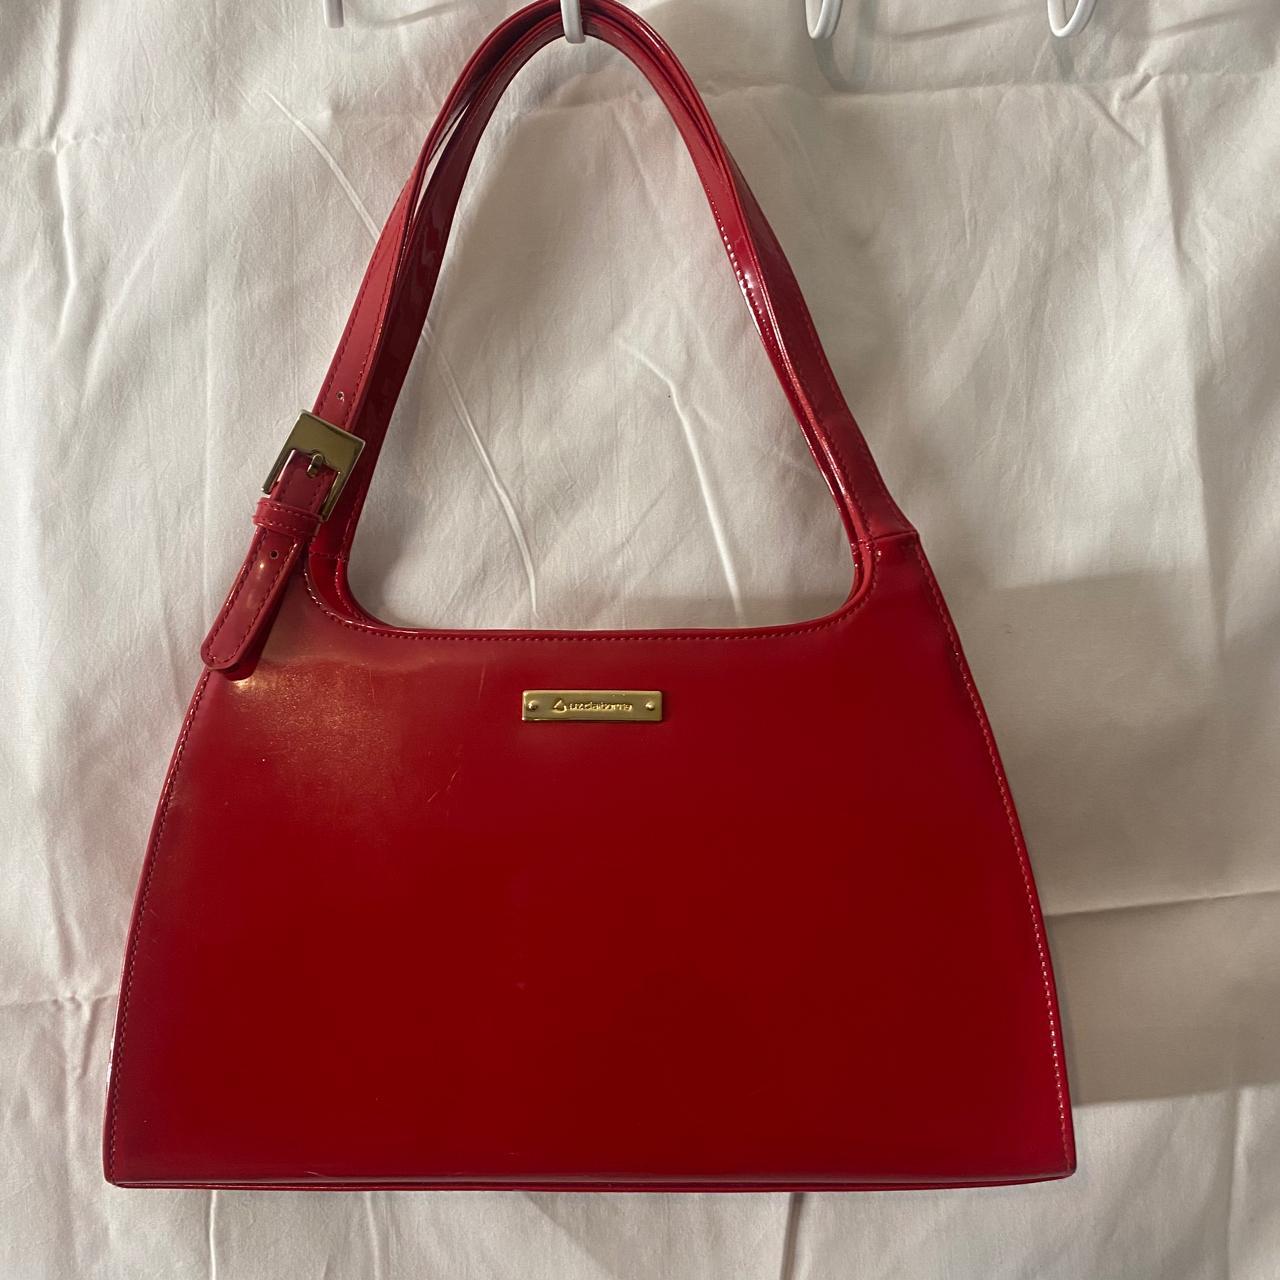 Liz Claiborne Women's Red Bag | Depop